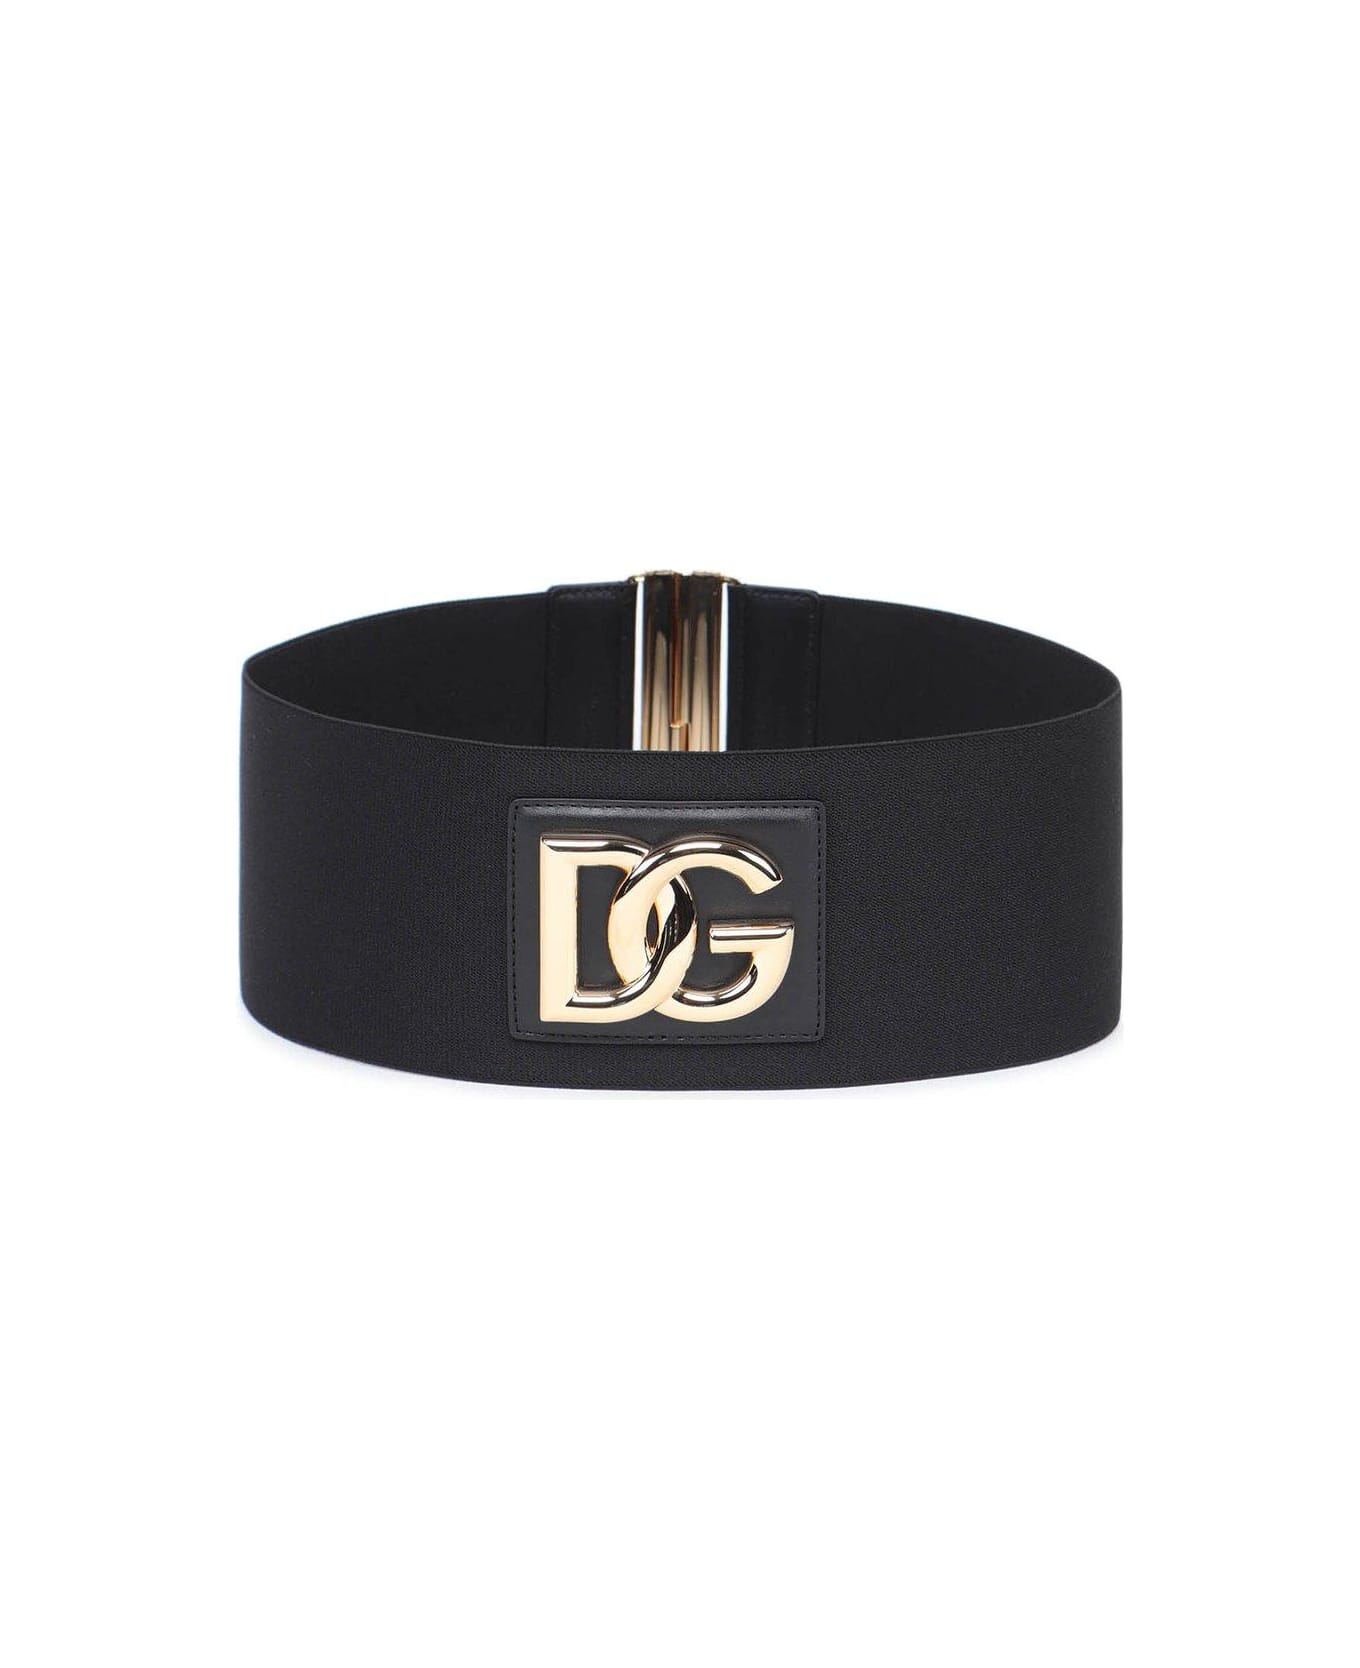 Dolce & Gabbana Dg Stretch Band Belt - Nero/nero ベルト